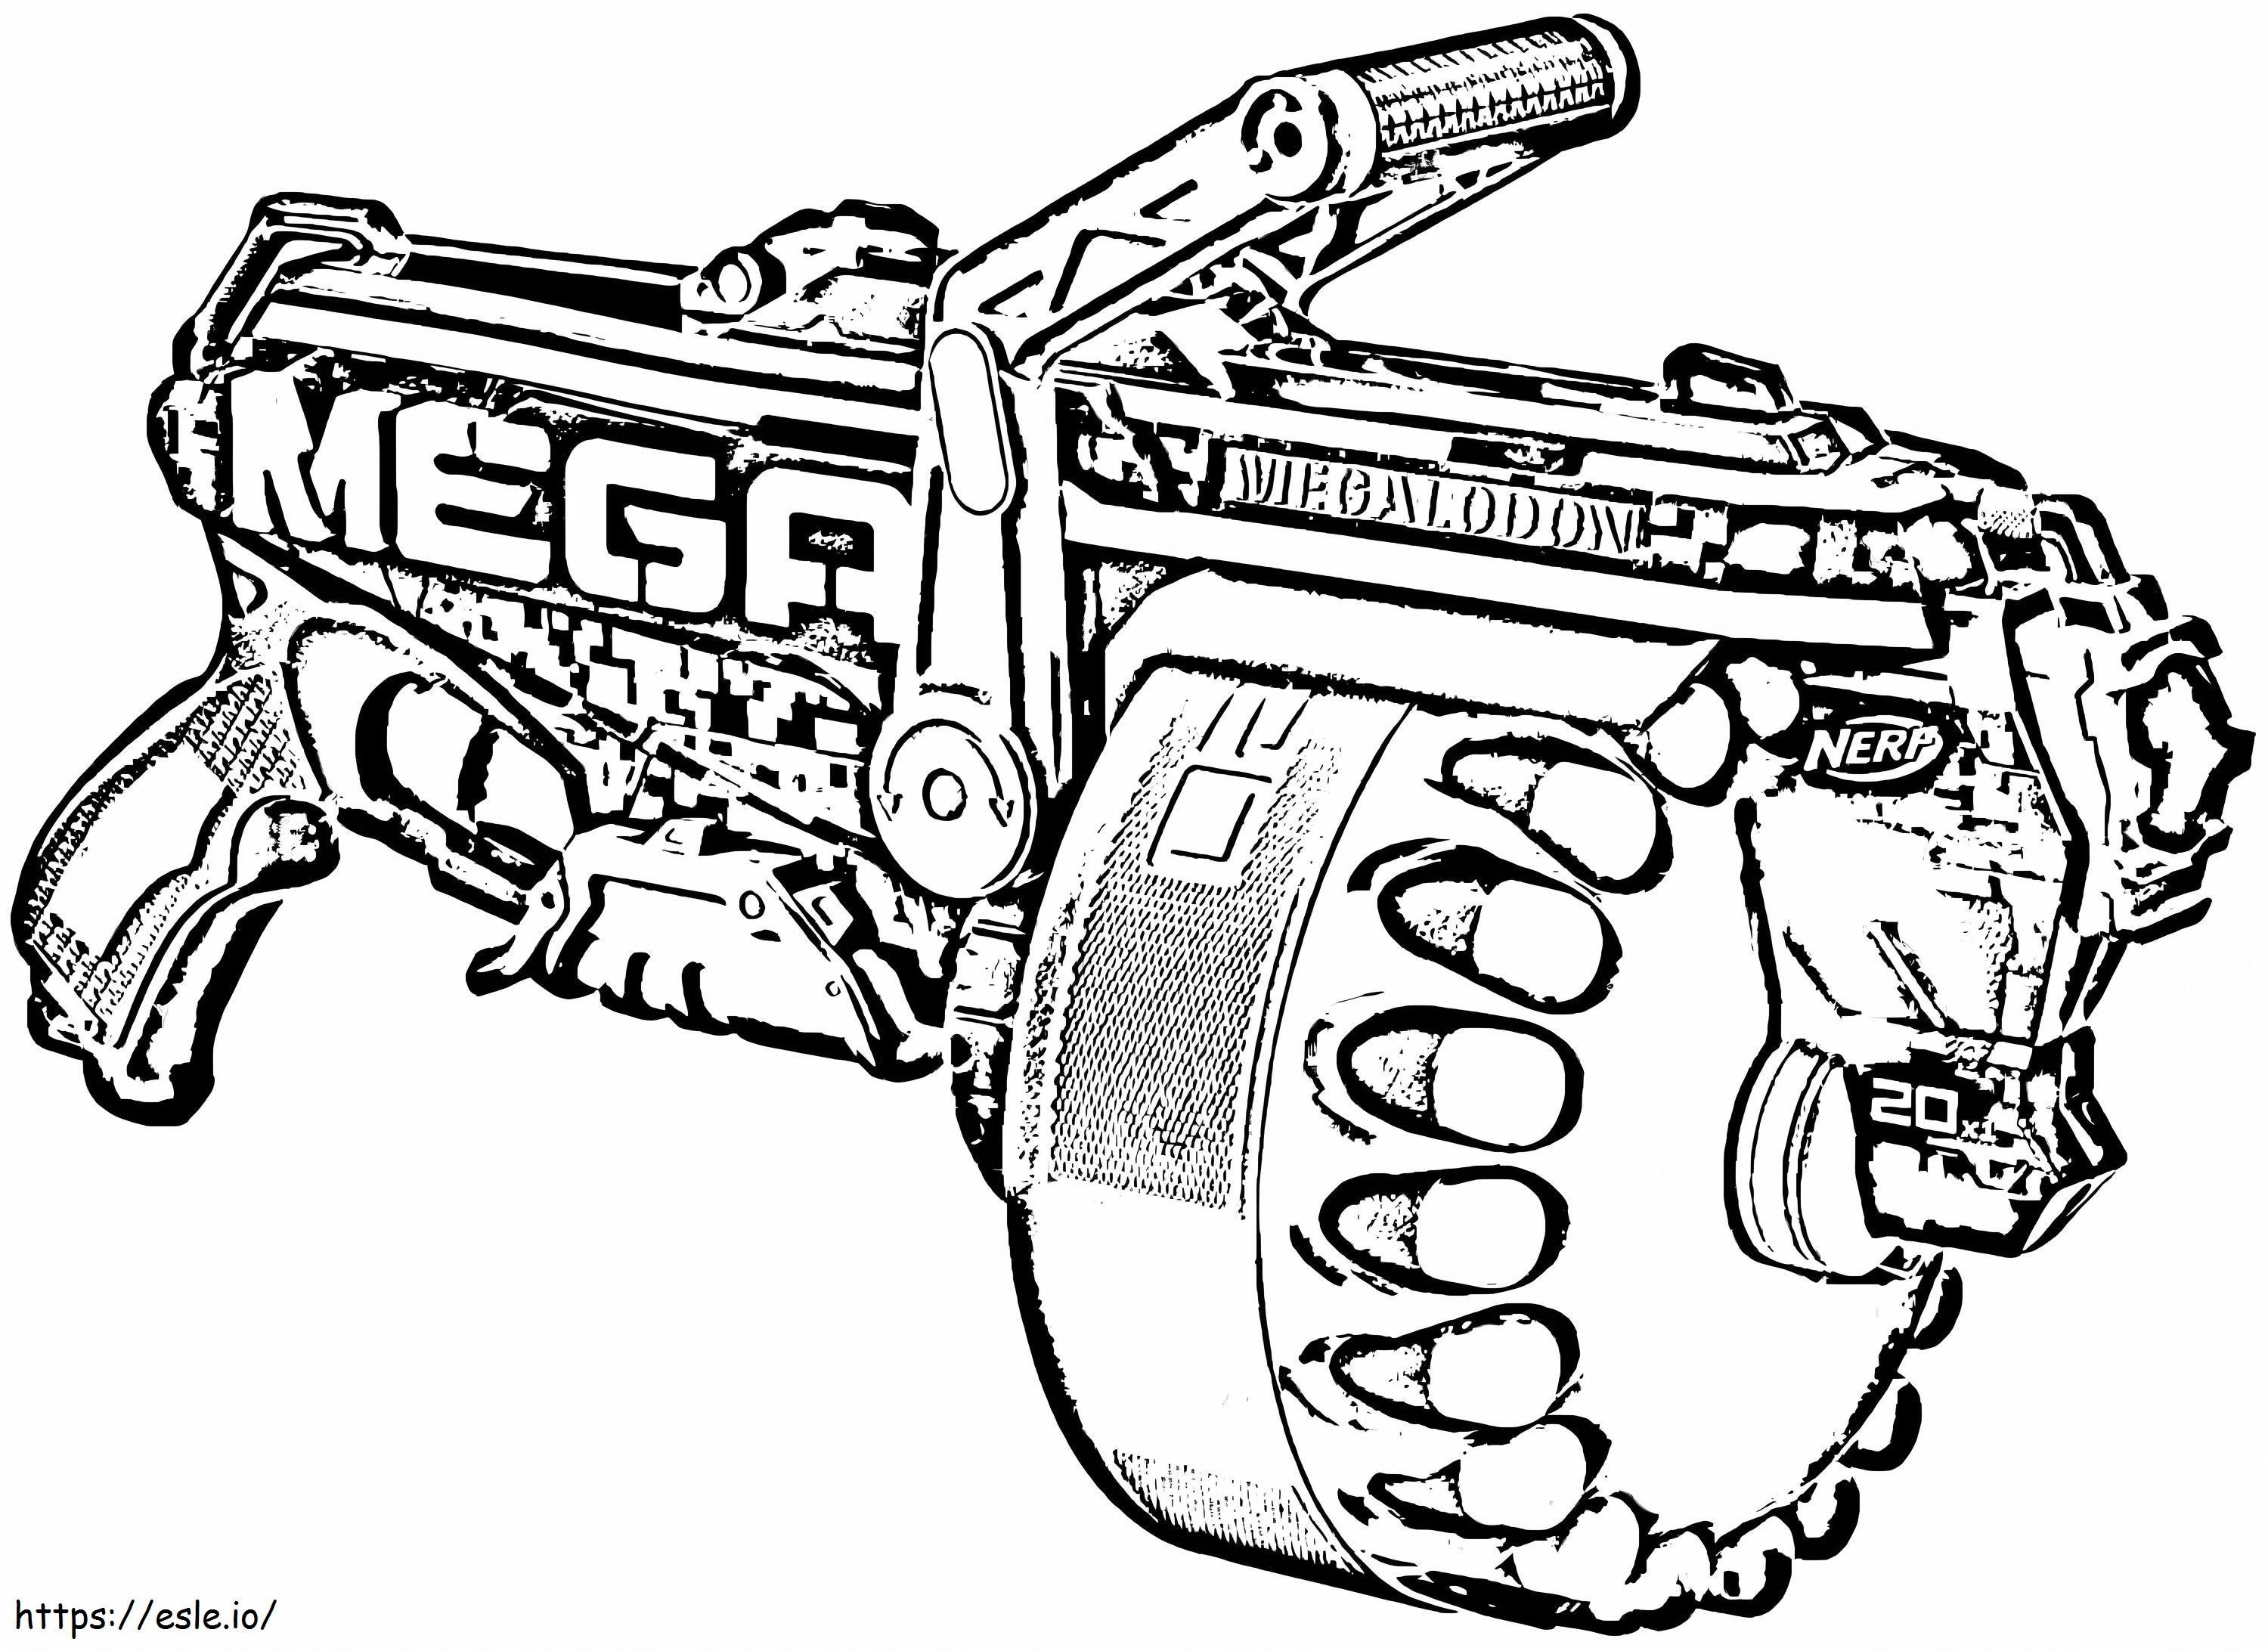 Normal Machine Gun coloring page